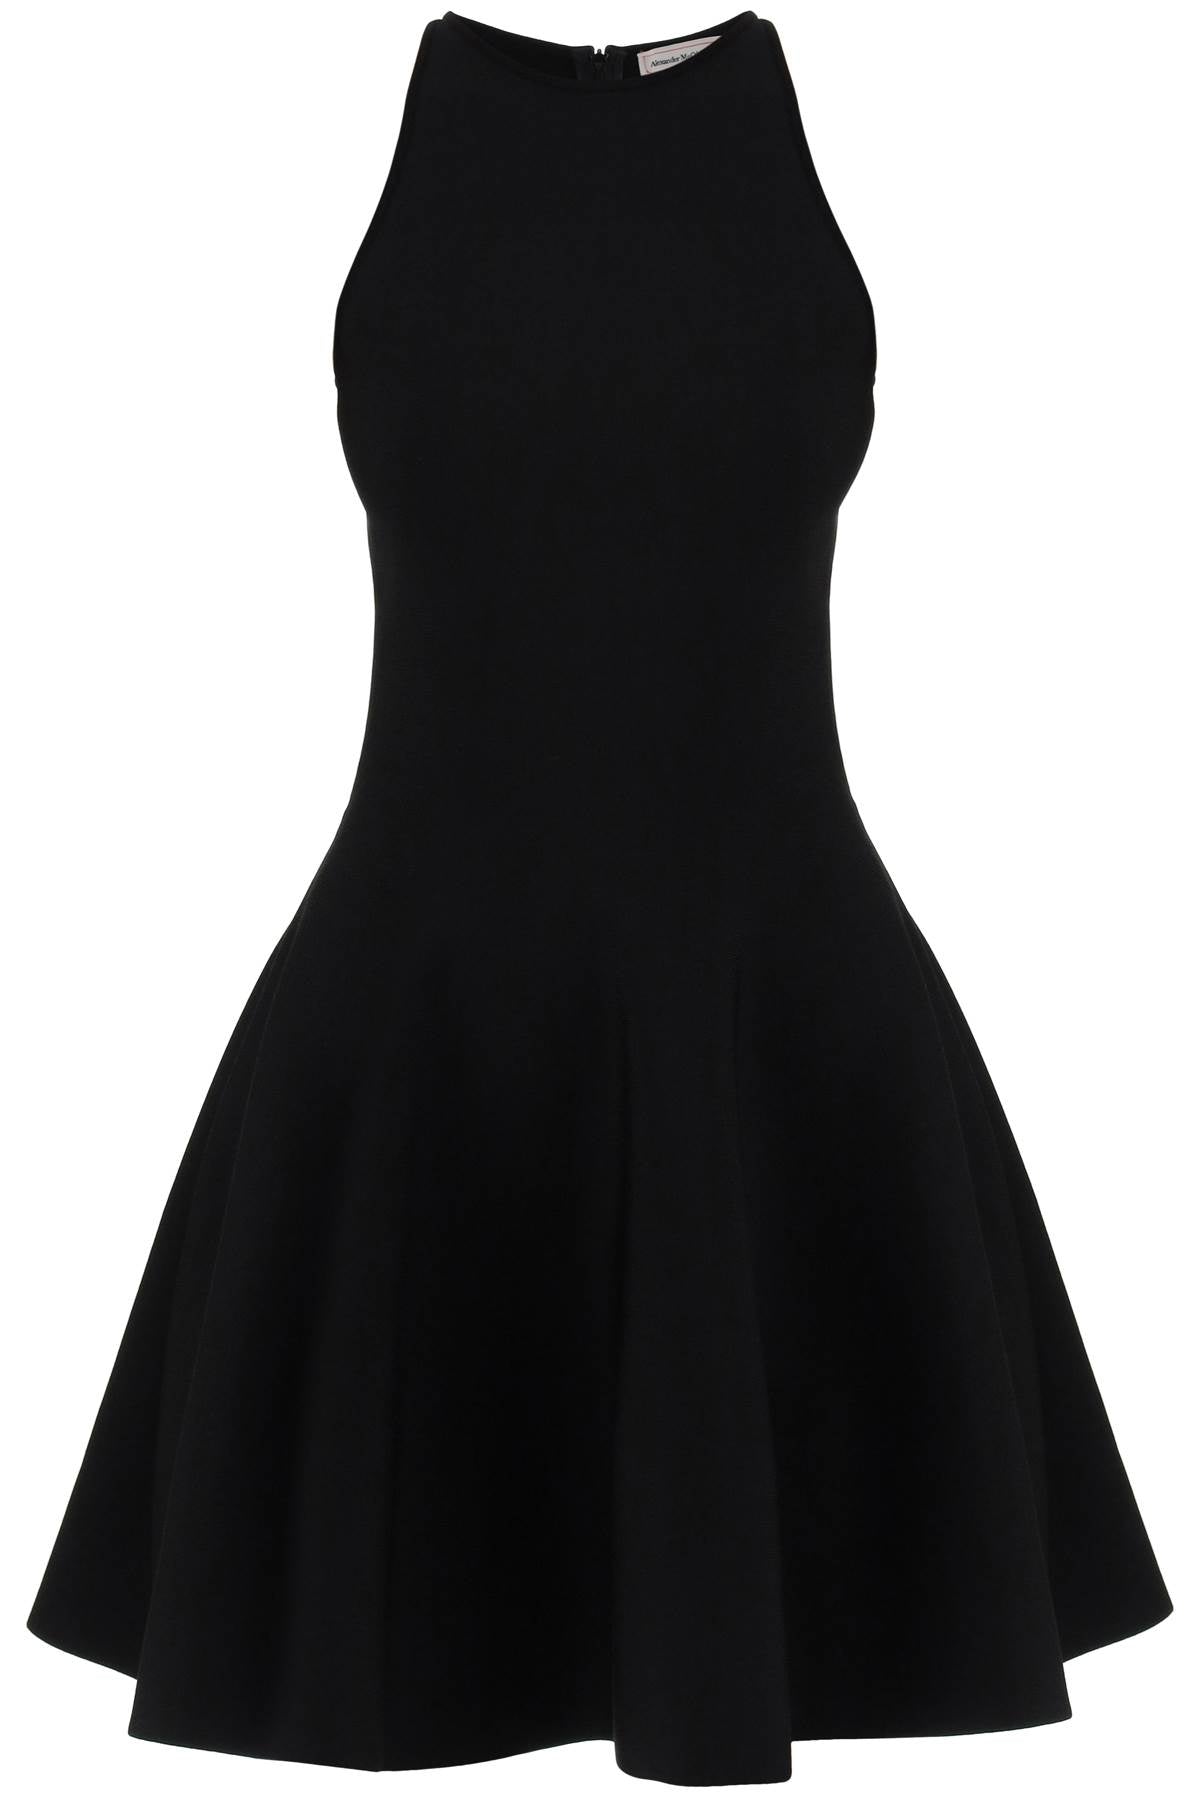 Shop Alexander Mcqueen Sleeveless Black Knit Skater Dress For Women